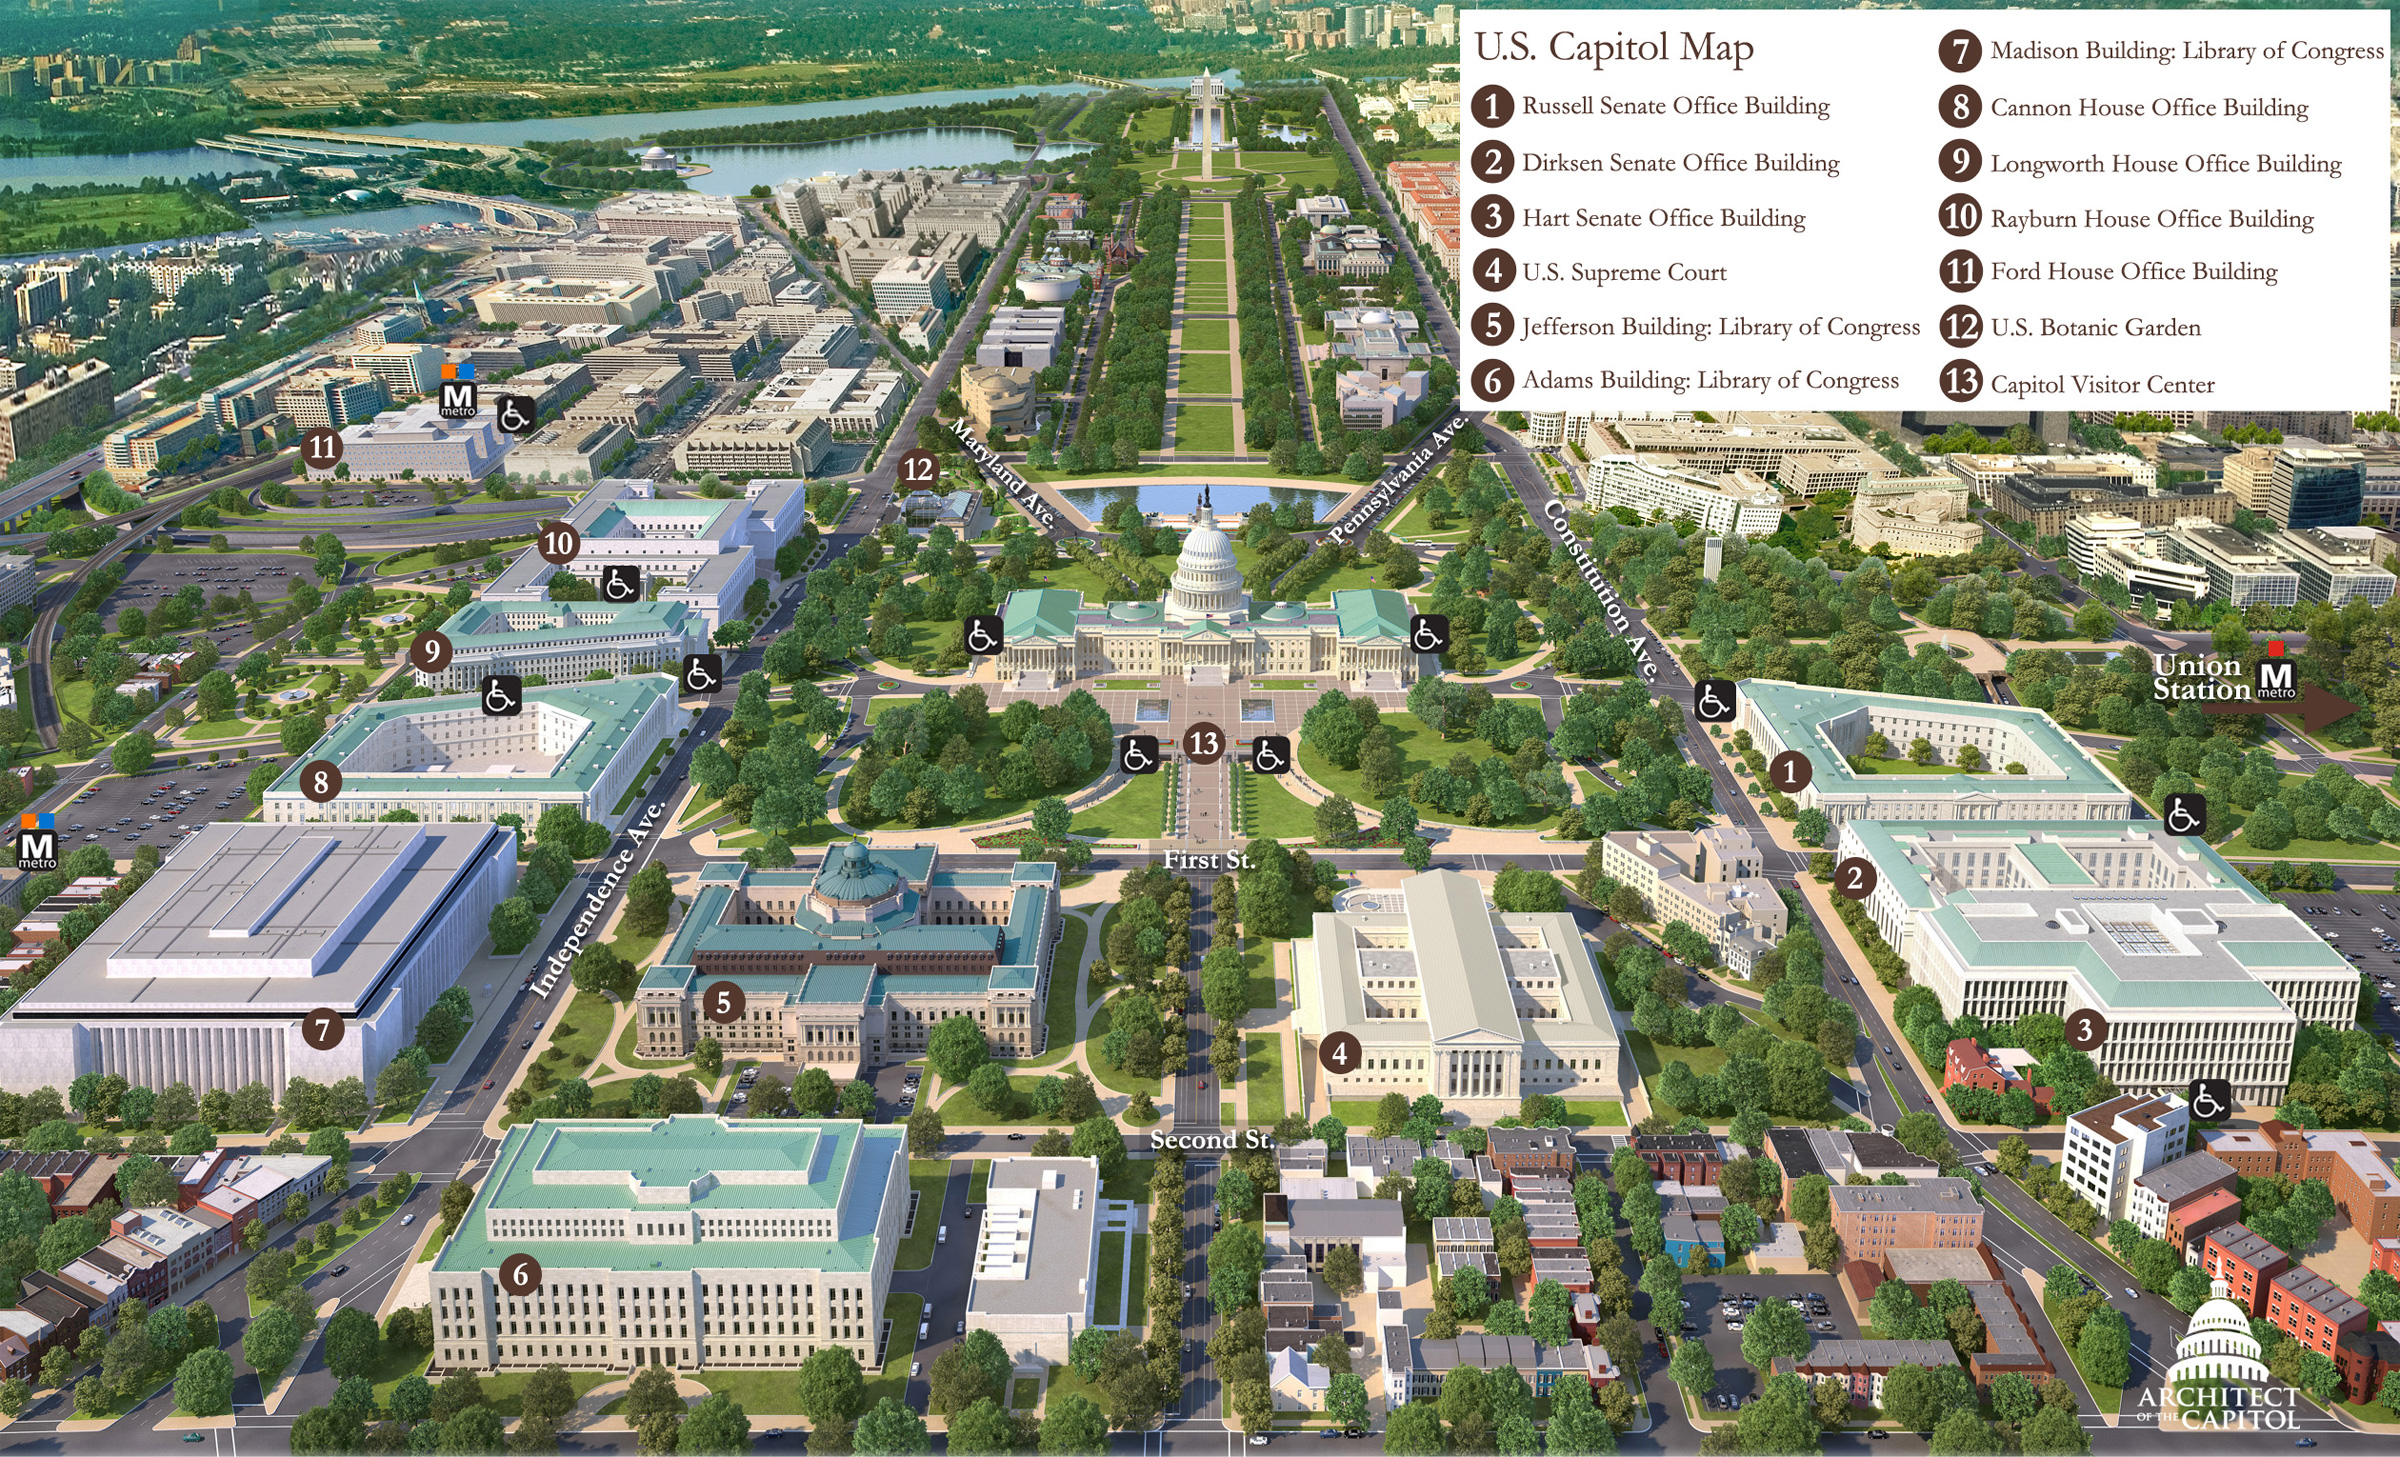 U.S. Capitol Map